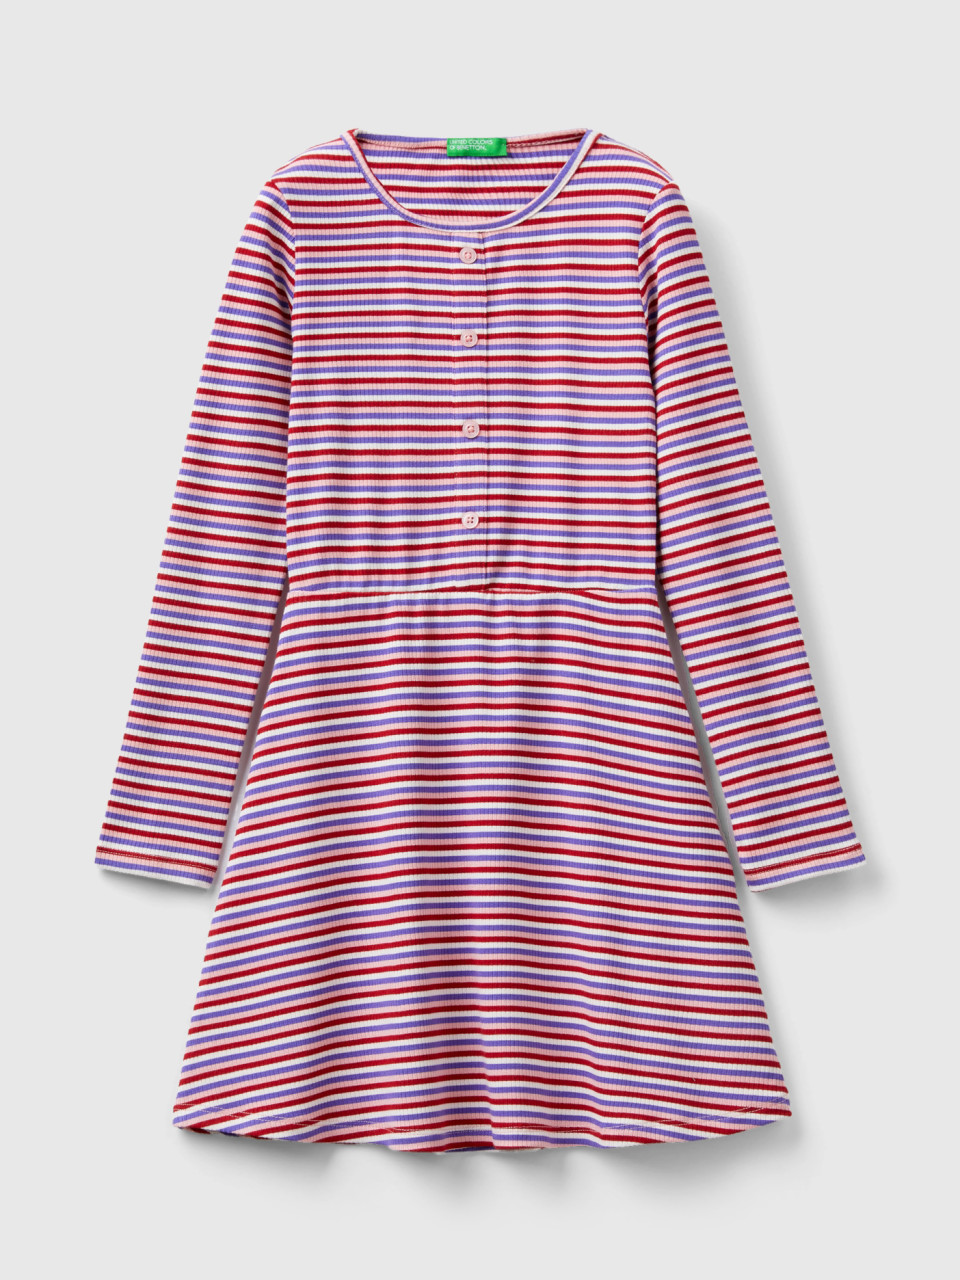 Benetton, Striped Shirt Dress, Multi-color, Kids